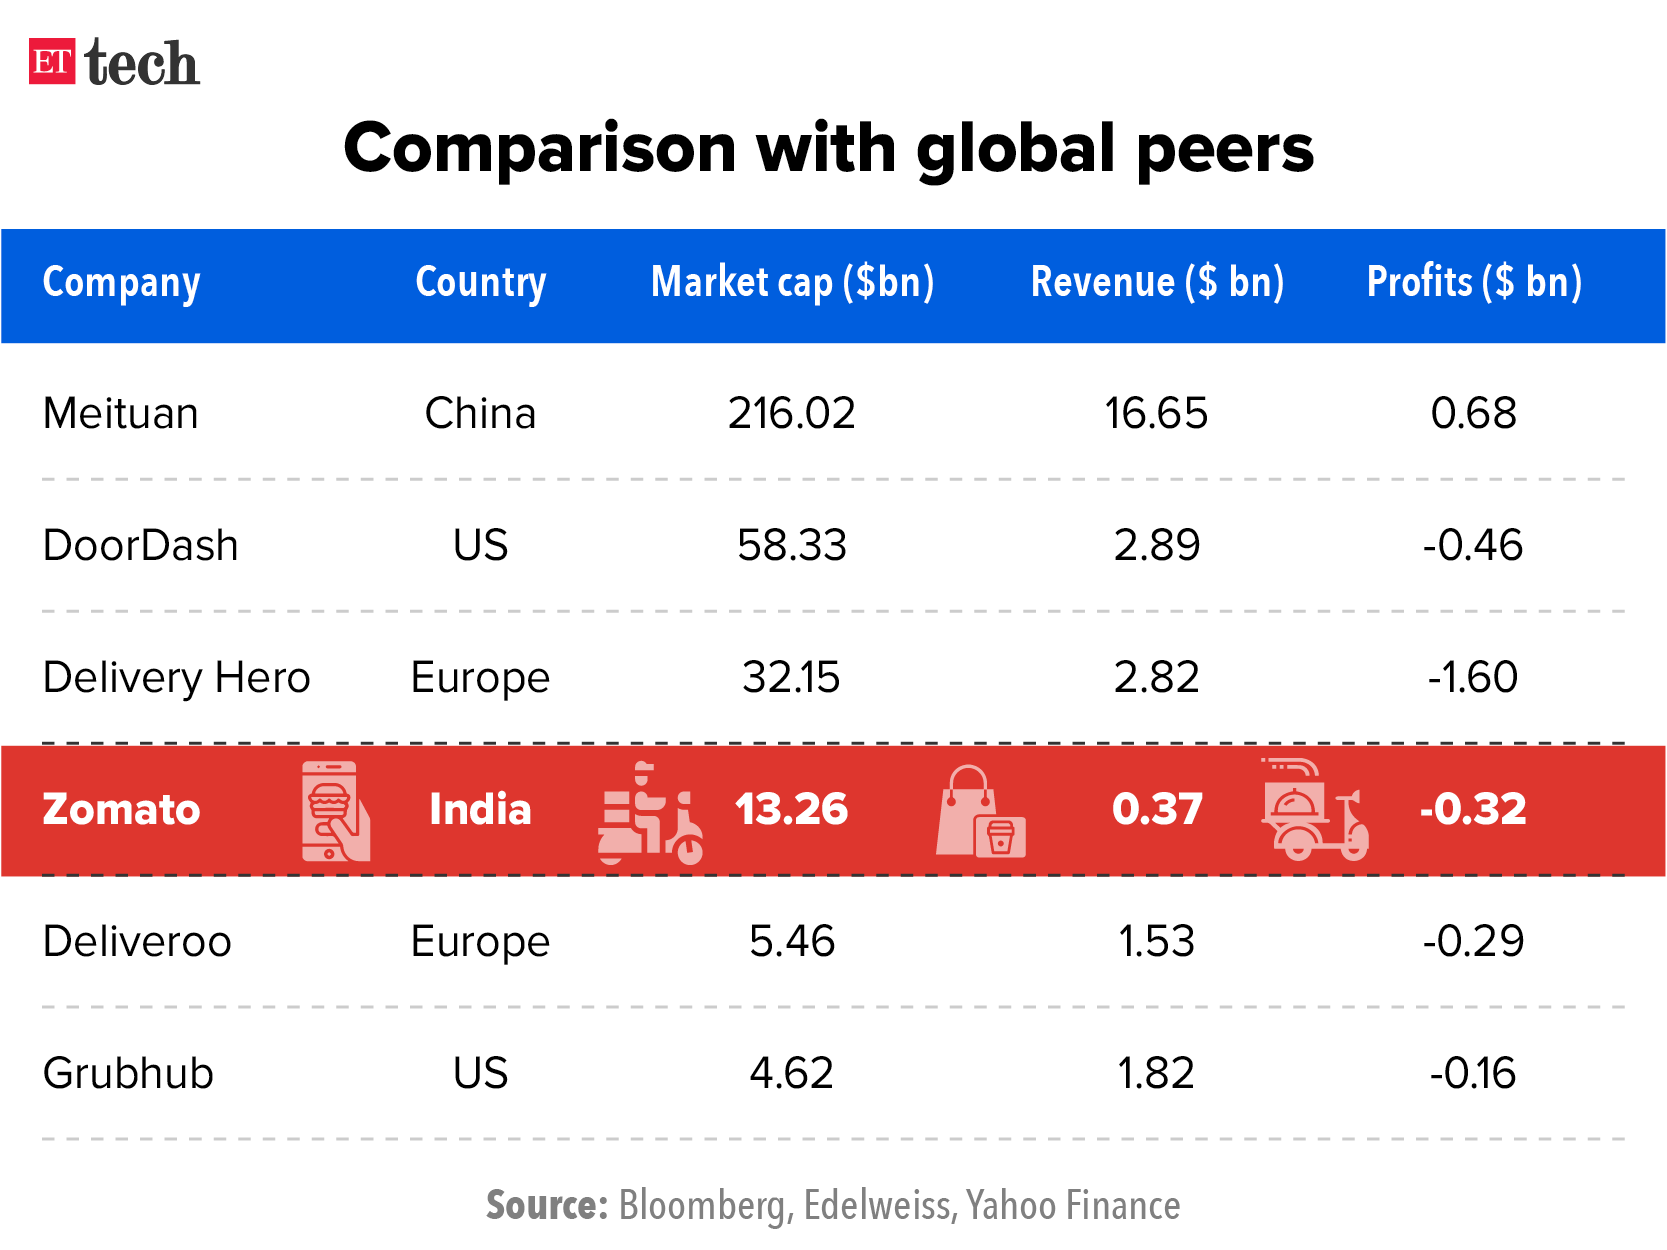 Zomato vs global peers